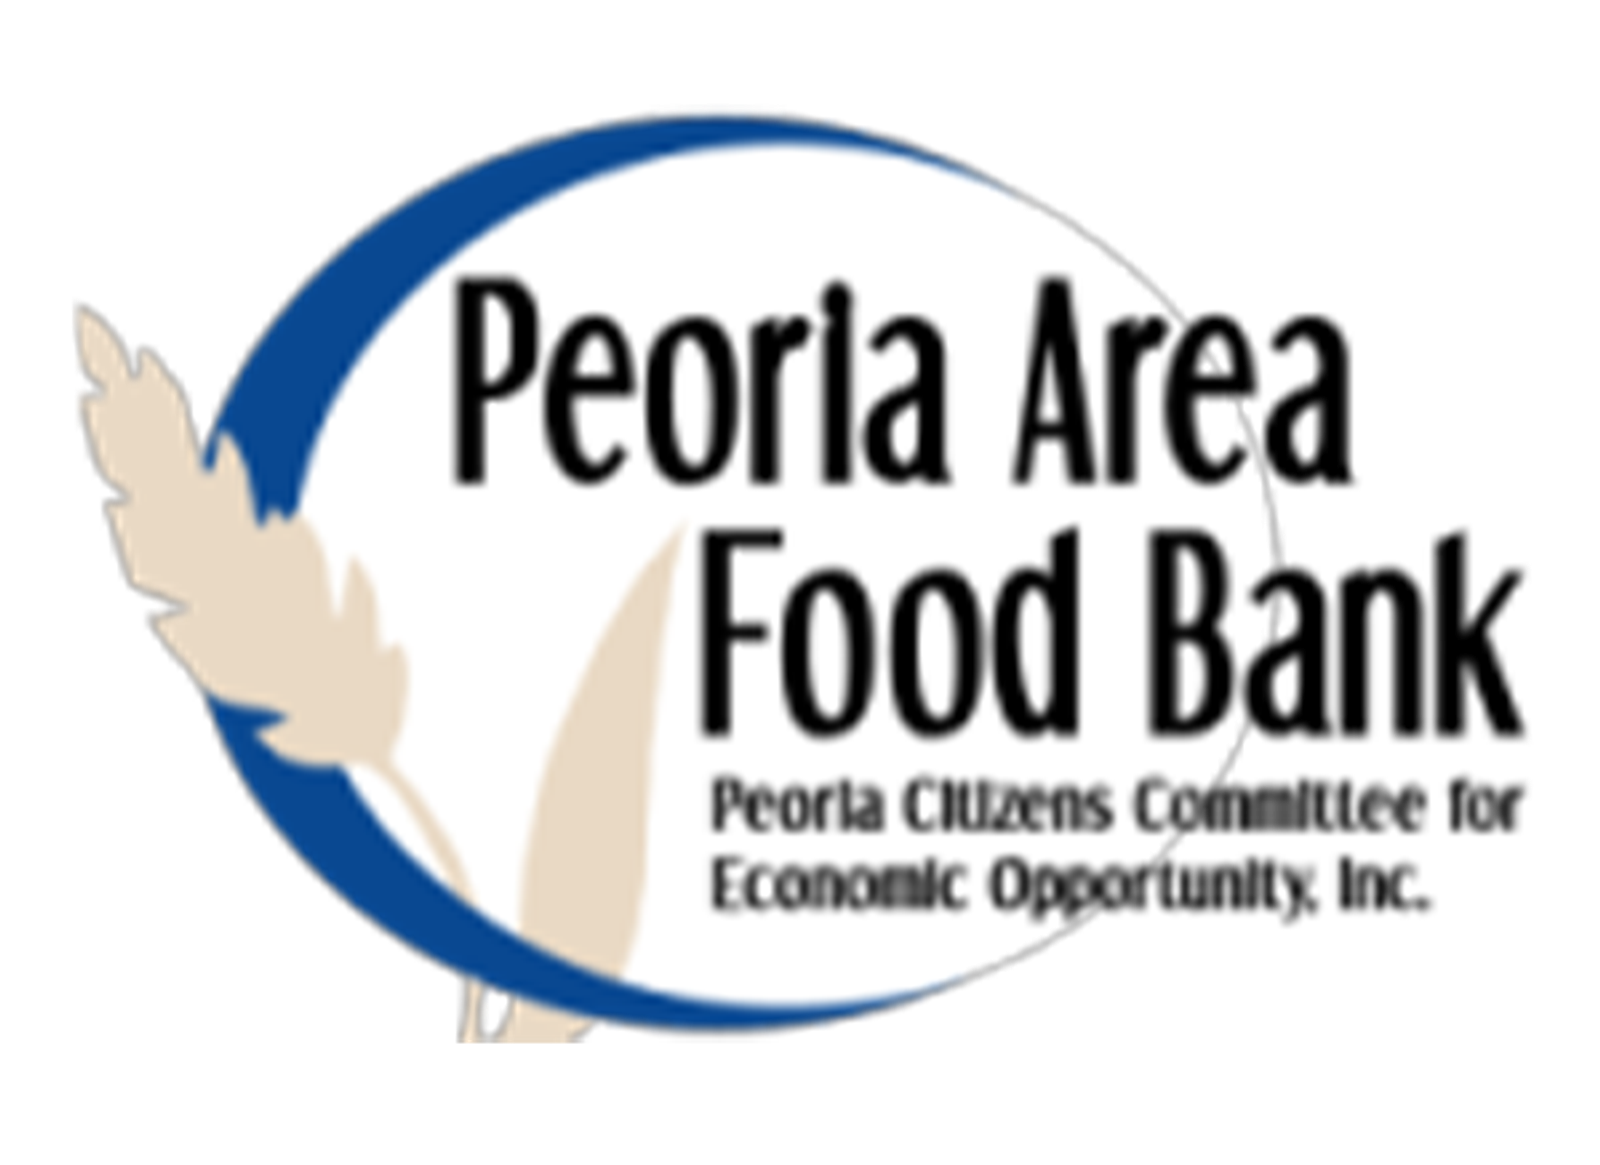 Peoria Area Food Bank